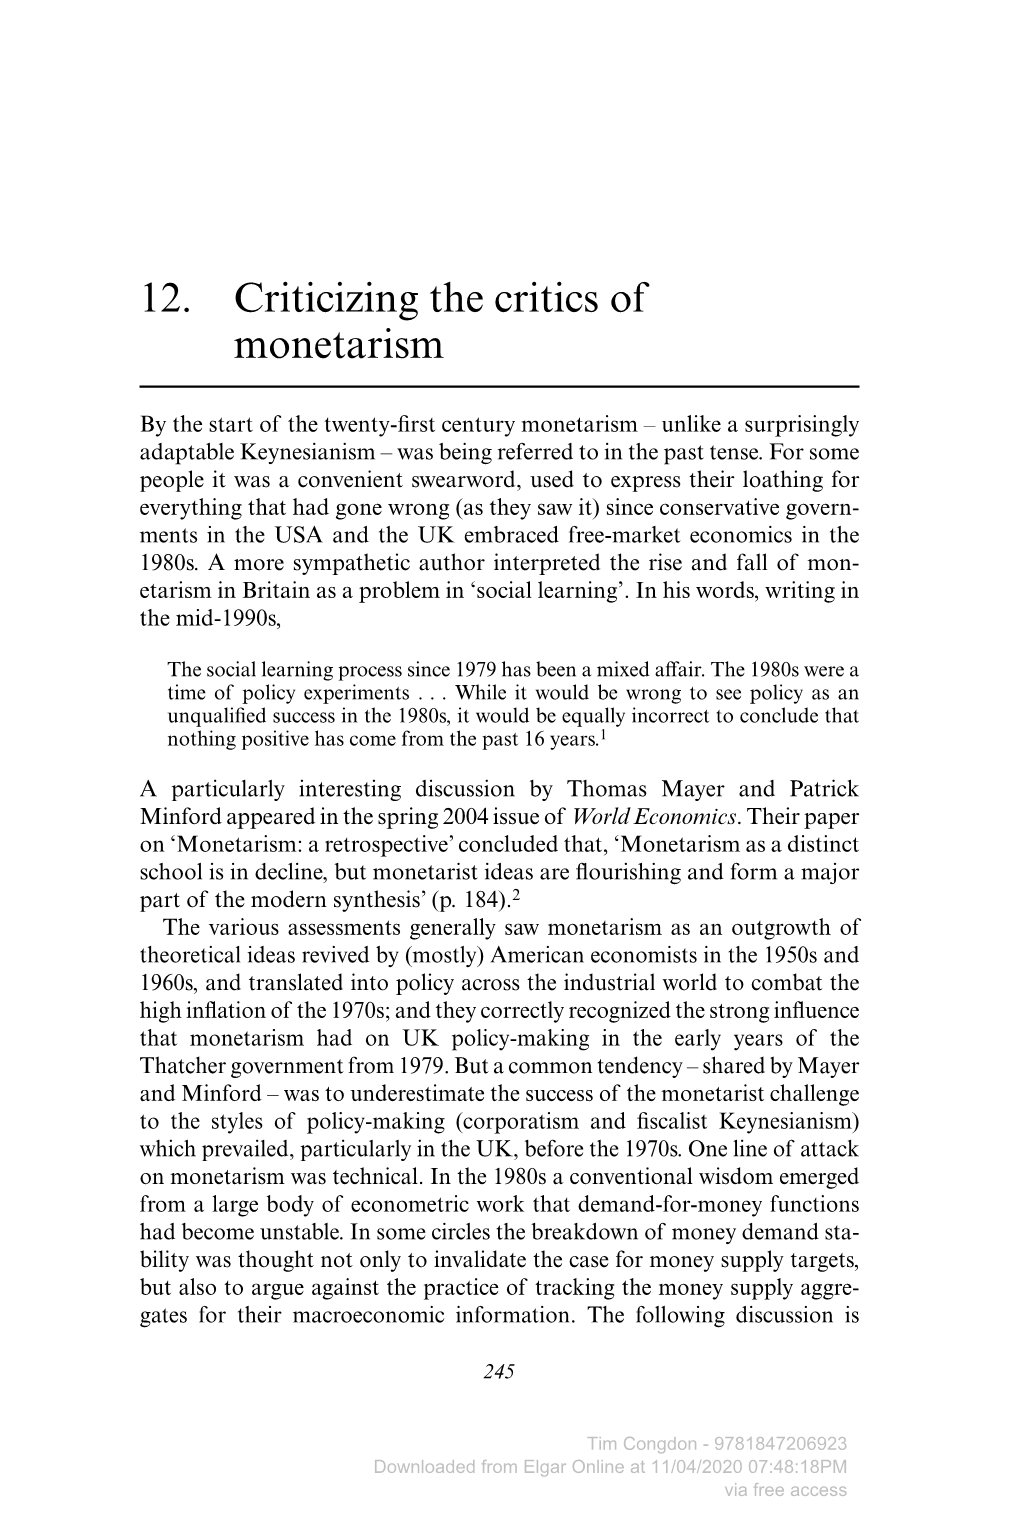 12. Criticizing the Critics of Monetarism